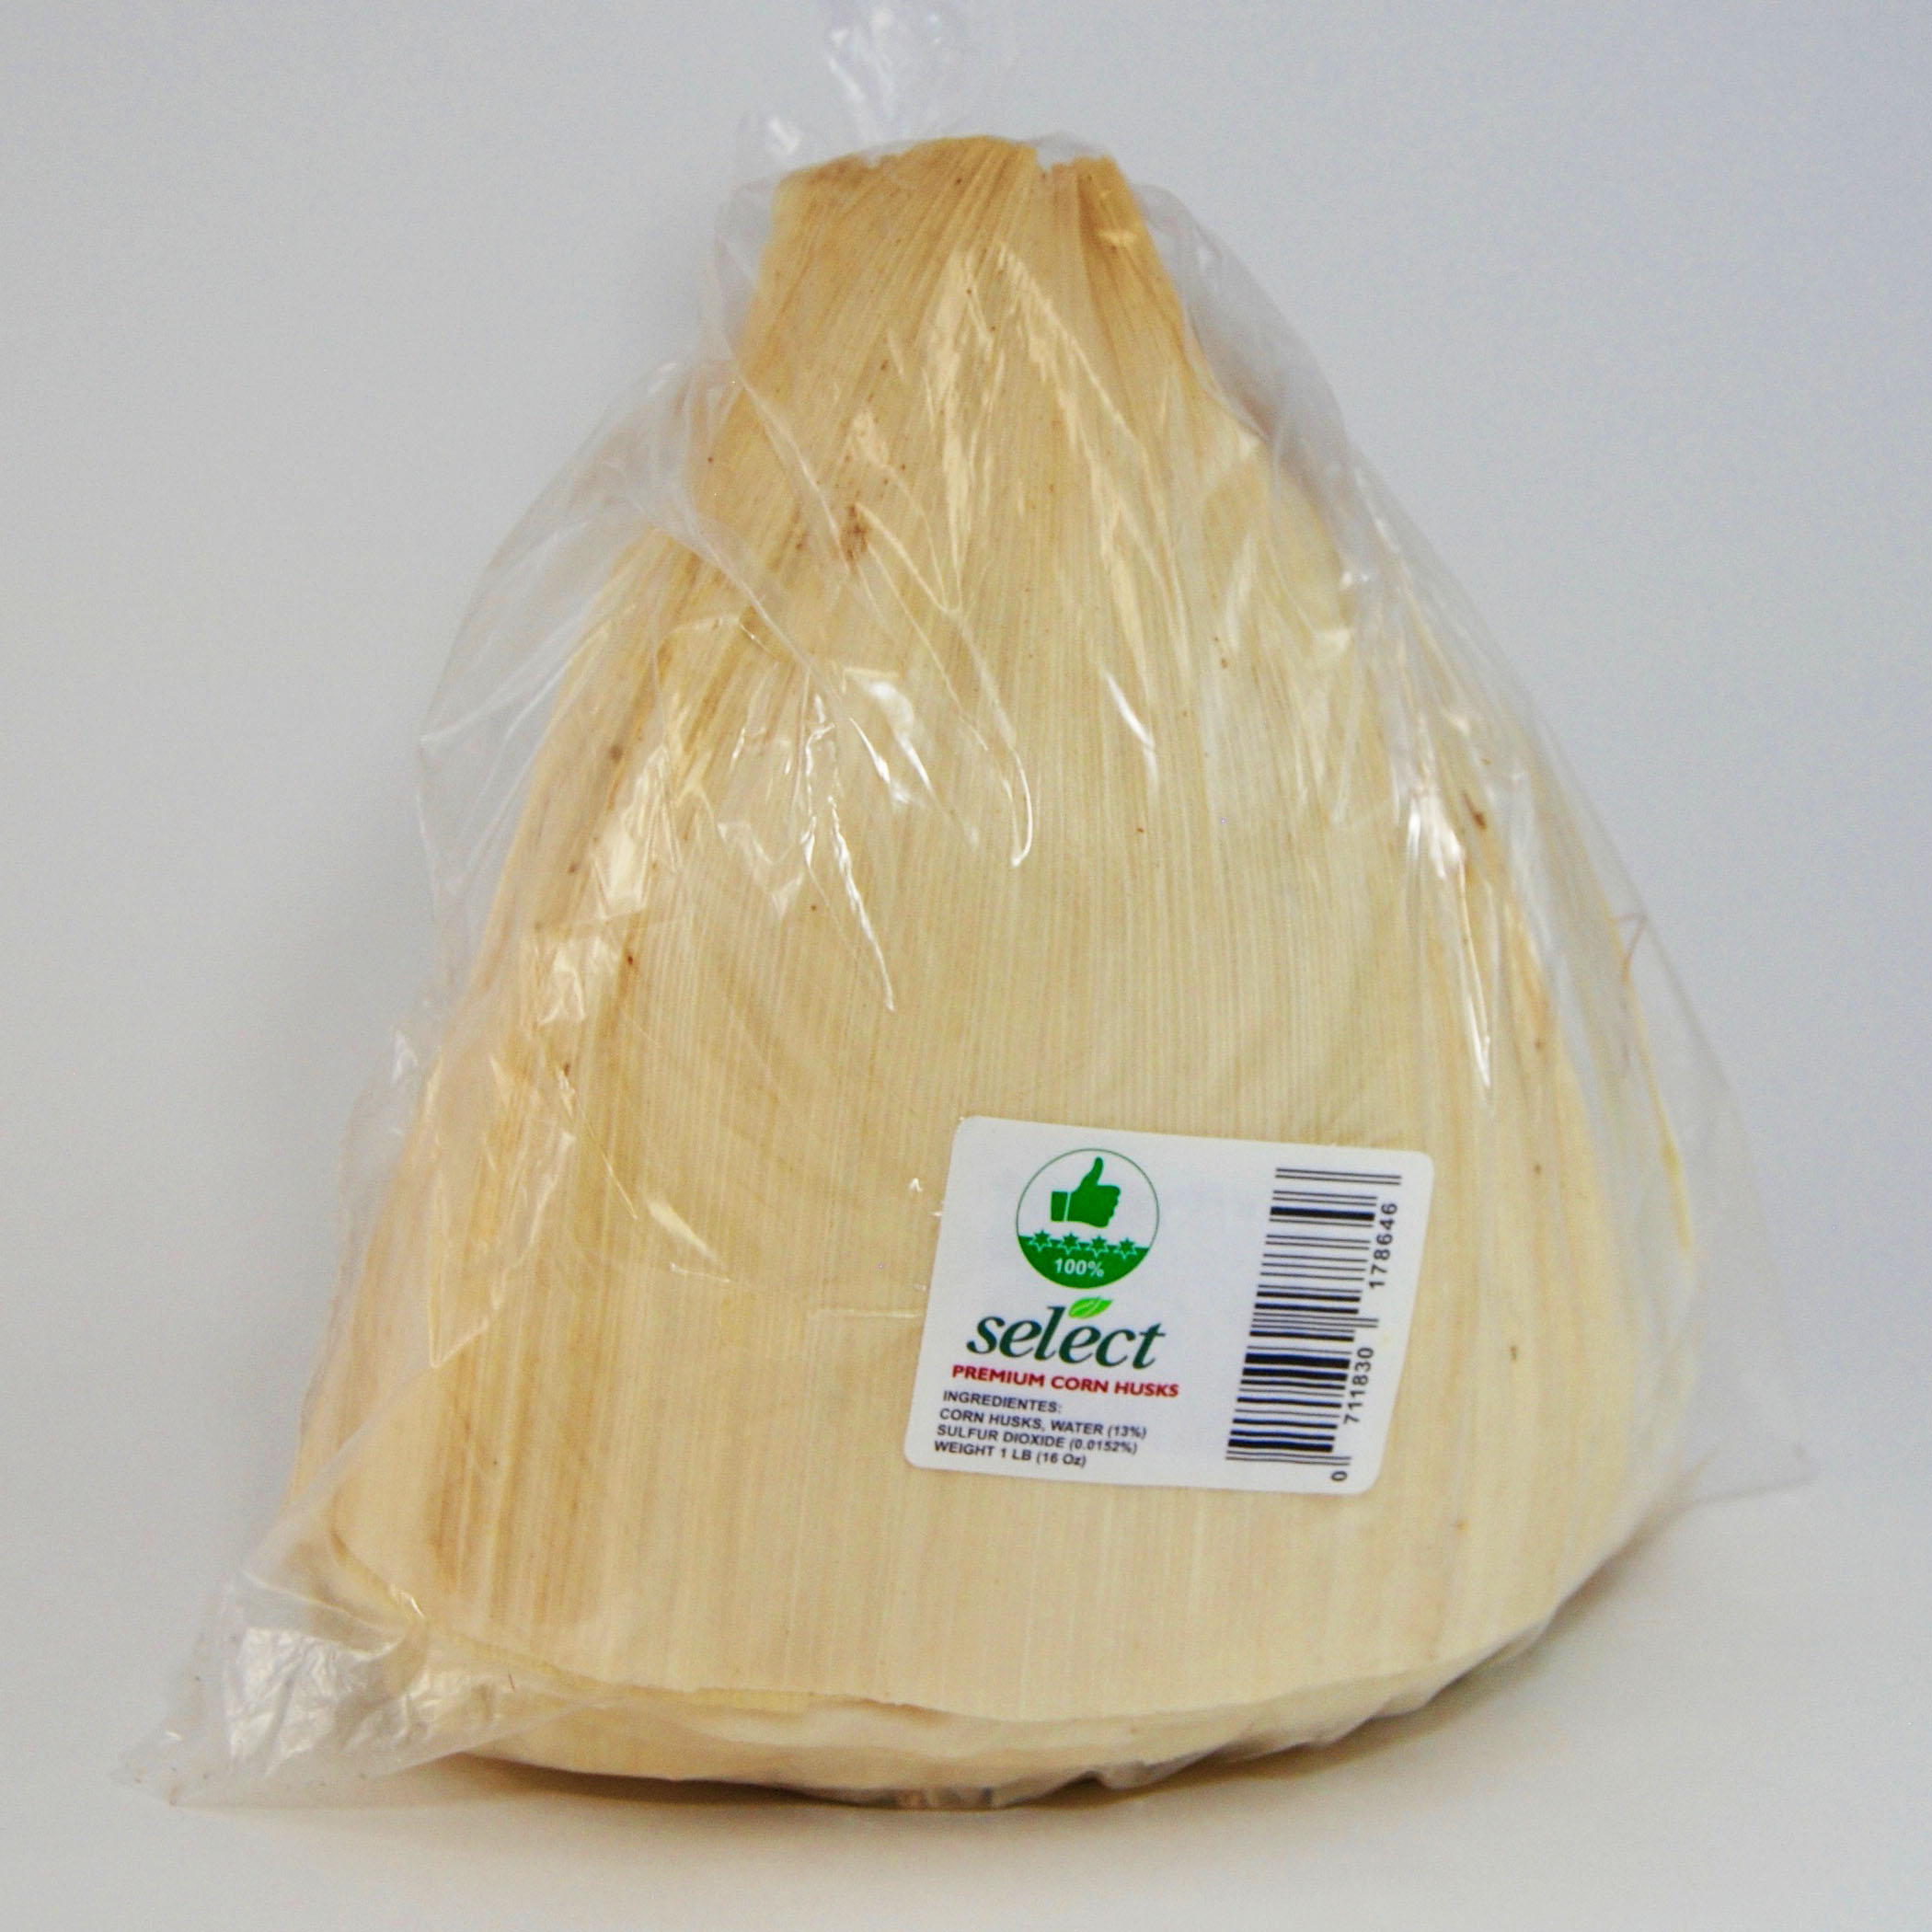 Buy Premium Corn Husks for Tamales - 1lb Pack at Ubuy France